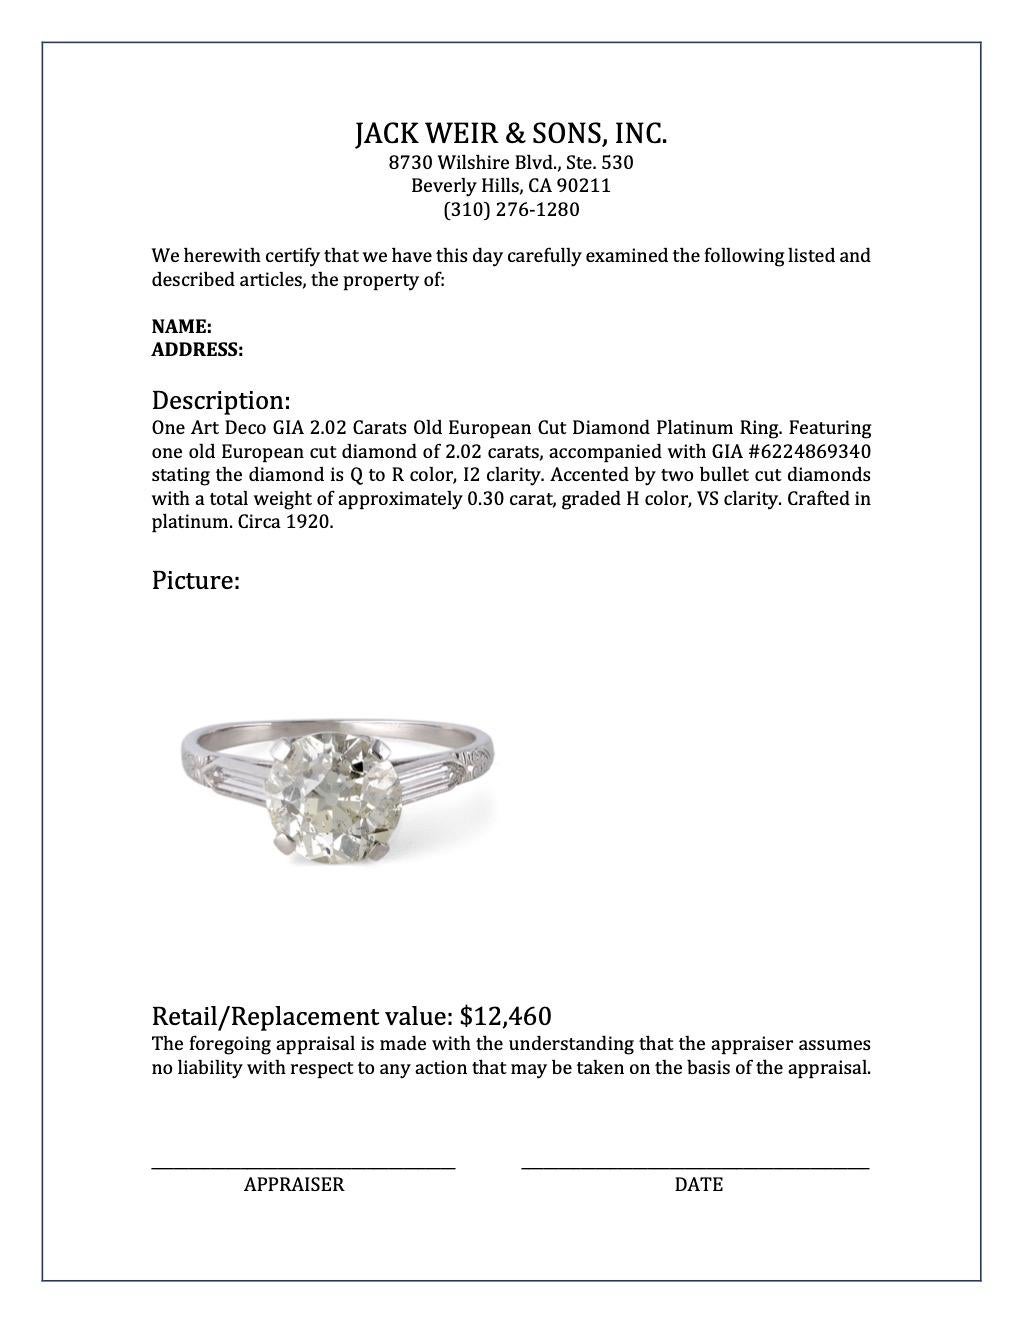 Art Deco GIA 2.02 Carats Old European Cut Diamond Platinum Ring 4